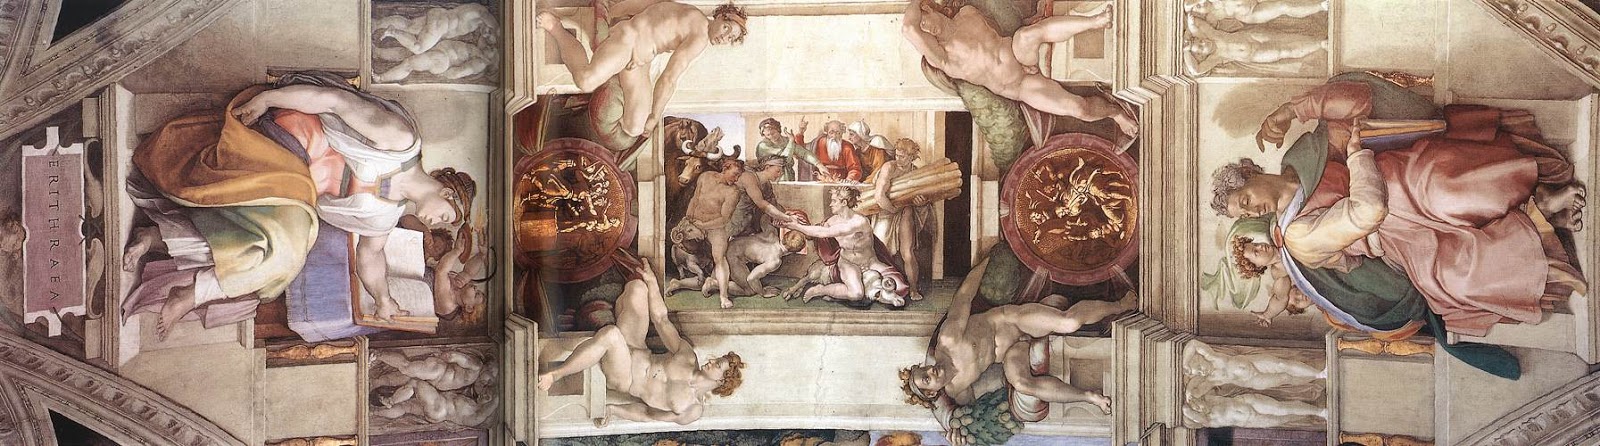 Michelangelo+Buonarroti-1475-1564 (379).jpg